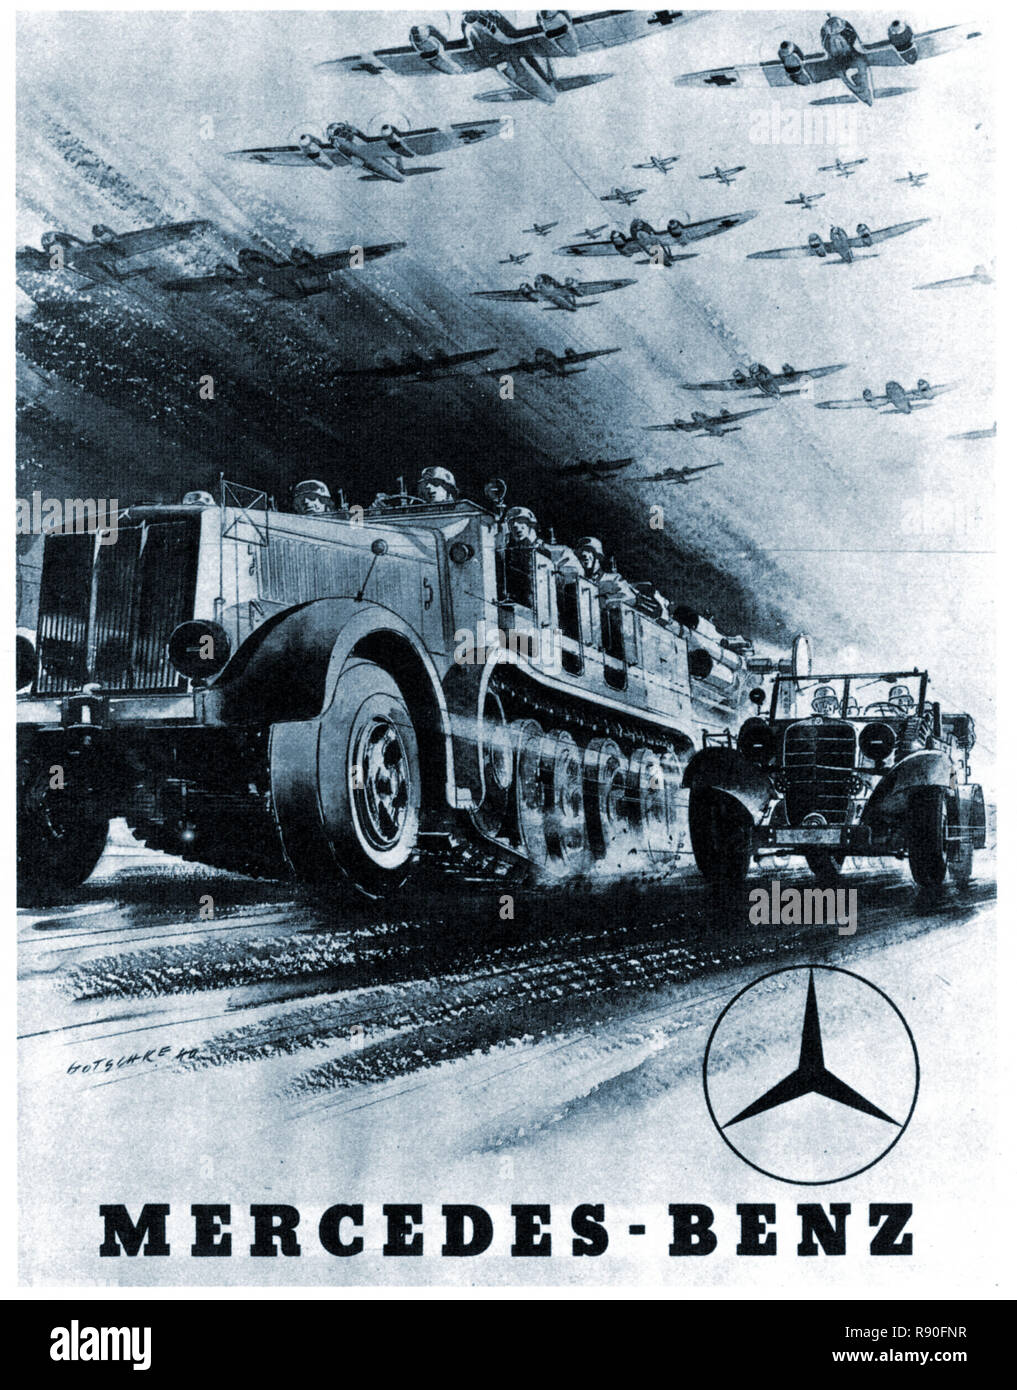 Mercedes Benz Joins The Blitzkreig - Vintage German Nazi Propaganda Poster Stock Photo